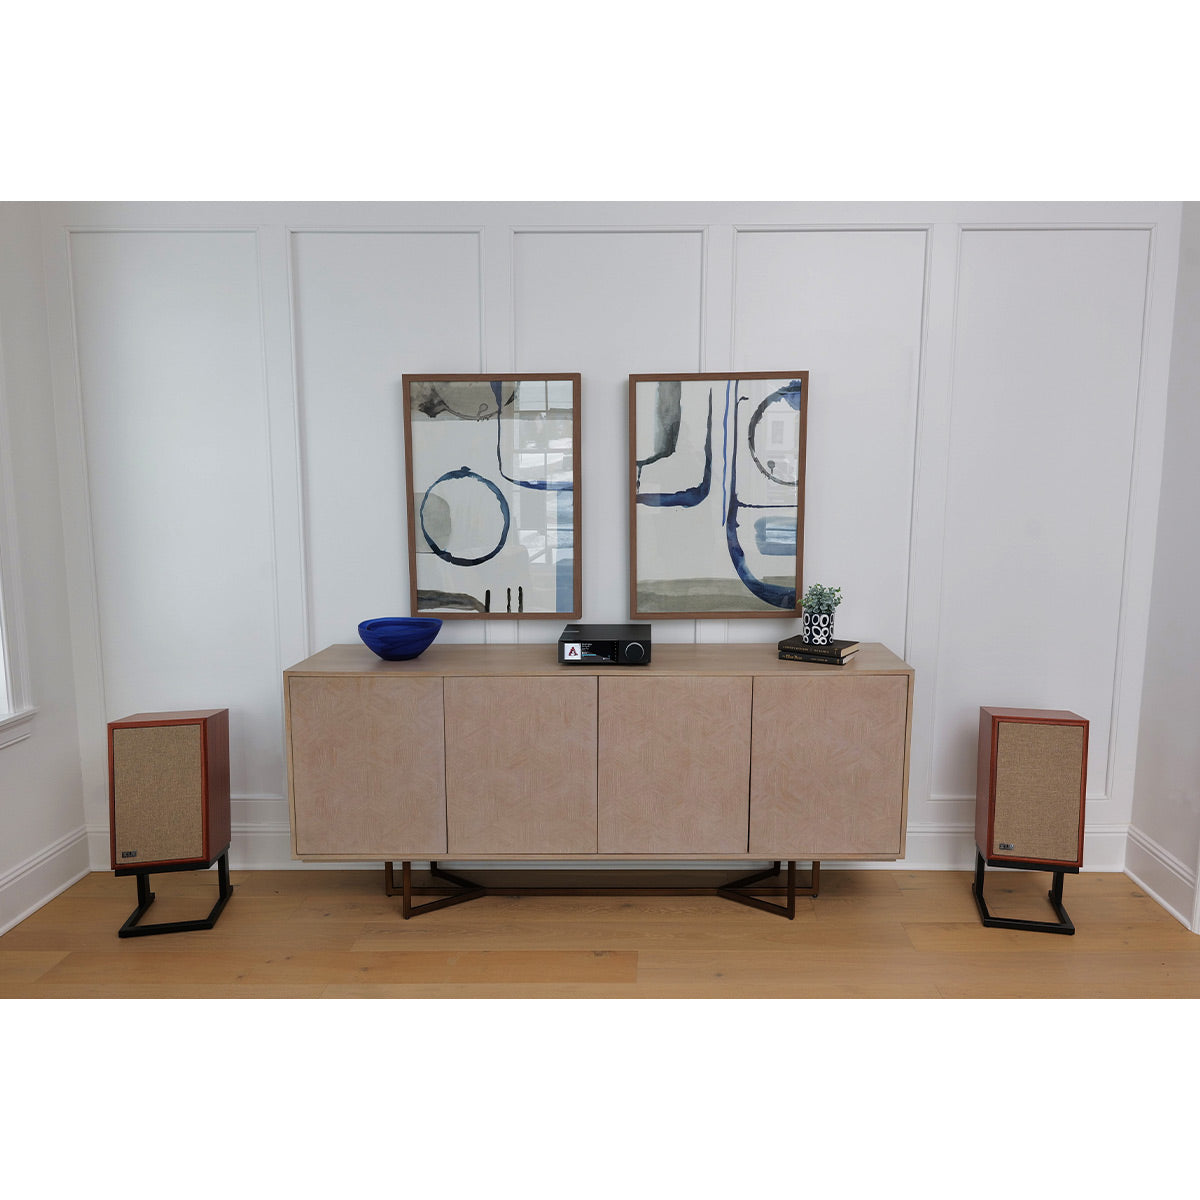 KLH Model Three 2-way 8-inch Acoustic Suspension Bookshelf Speaker - Pair (West African Mahogany)